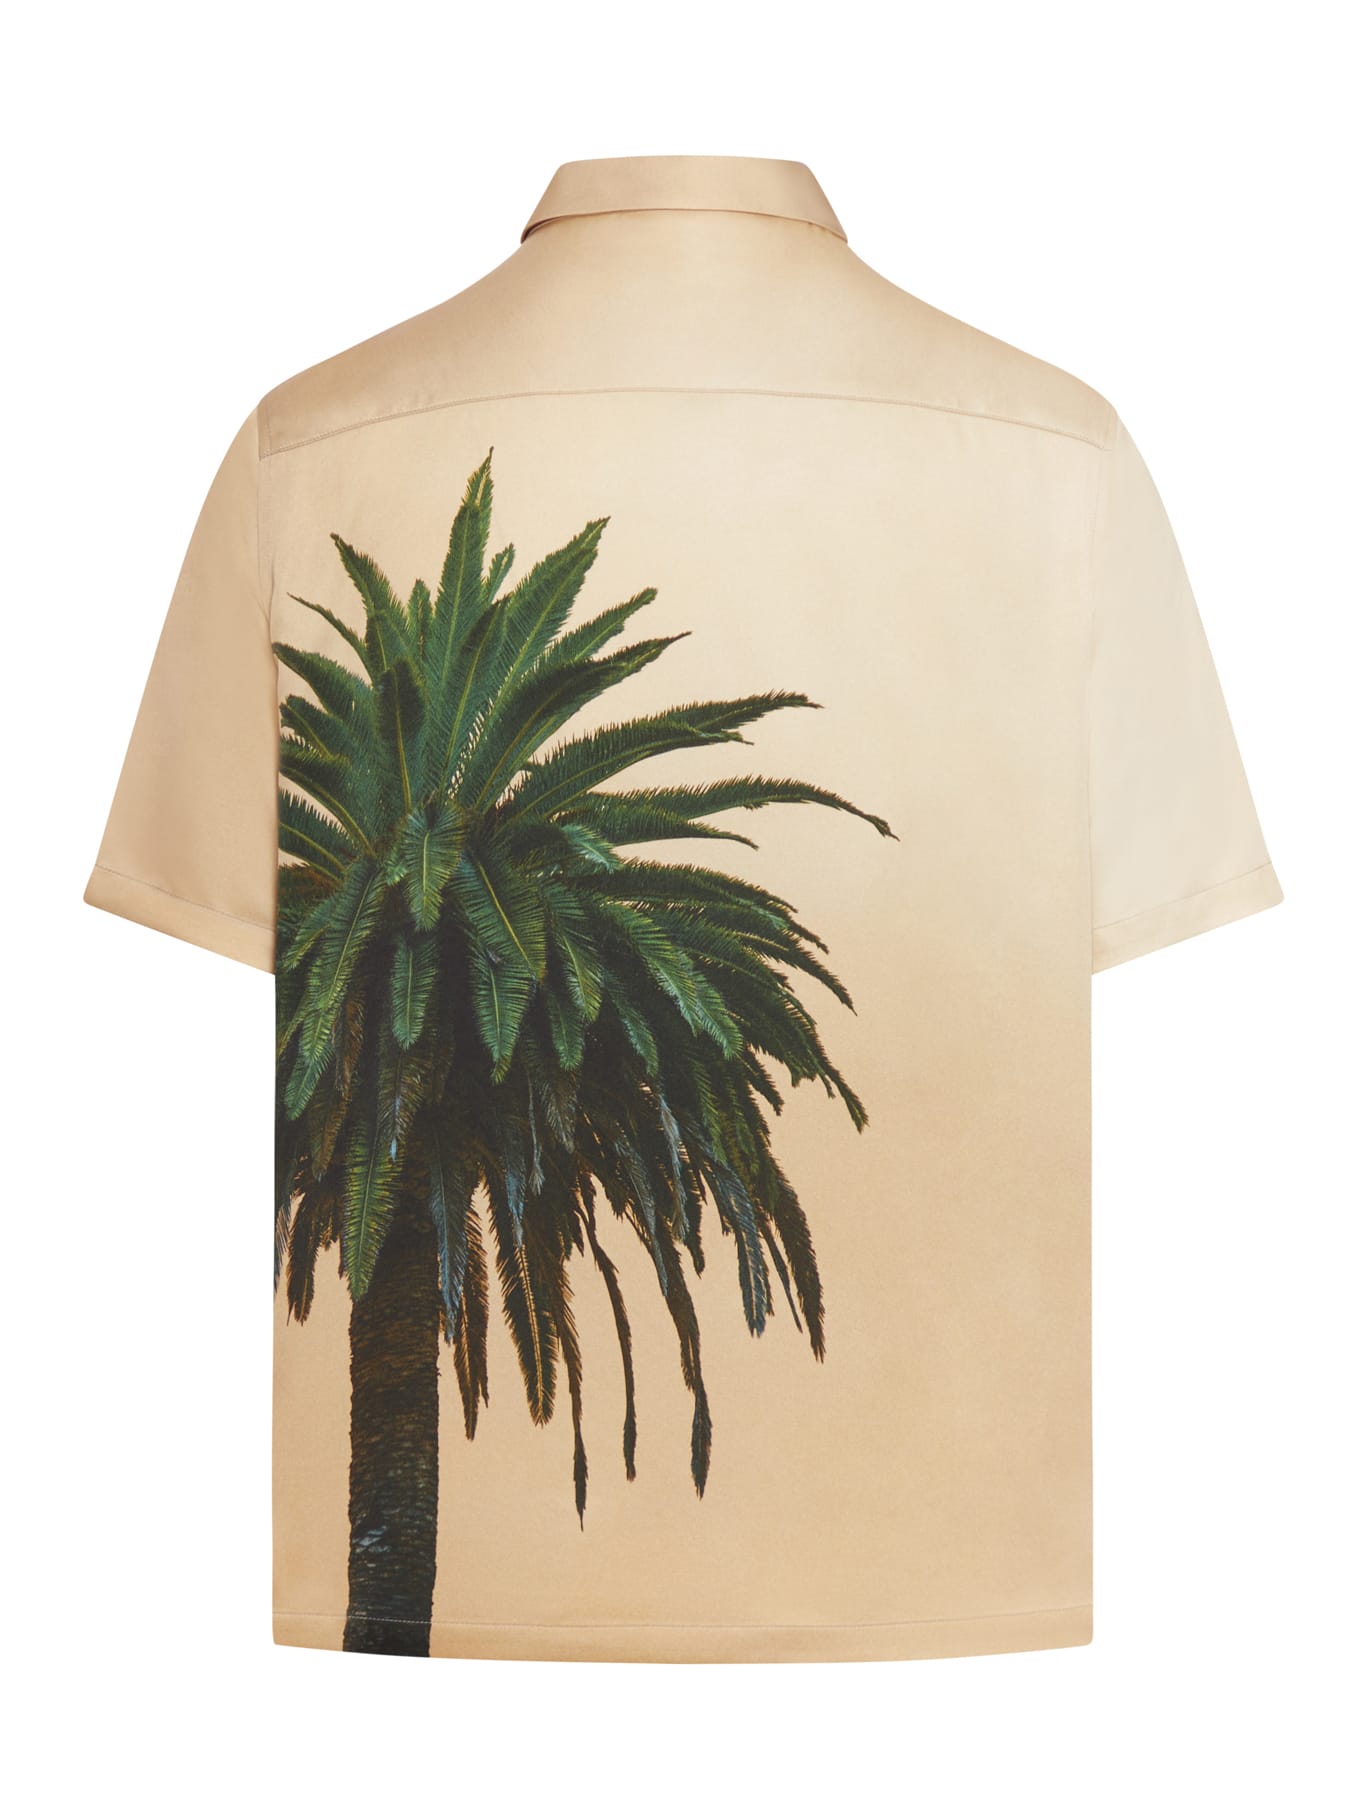 Shop Blue Sky Inn Royal Palm Shirt In Qup Royal Palm